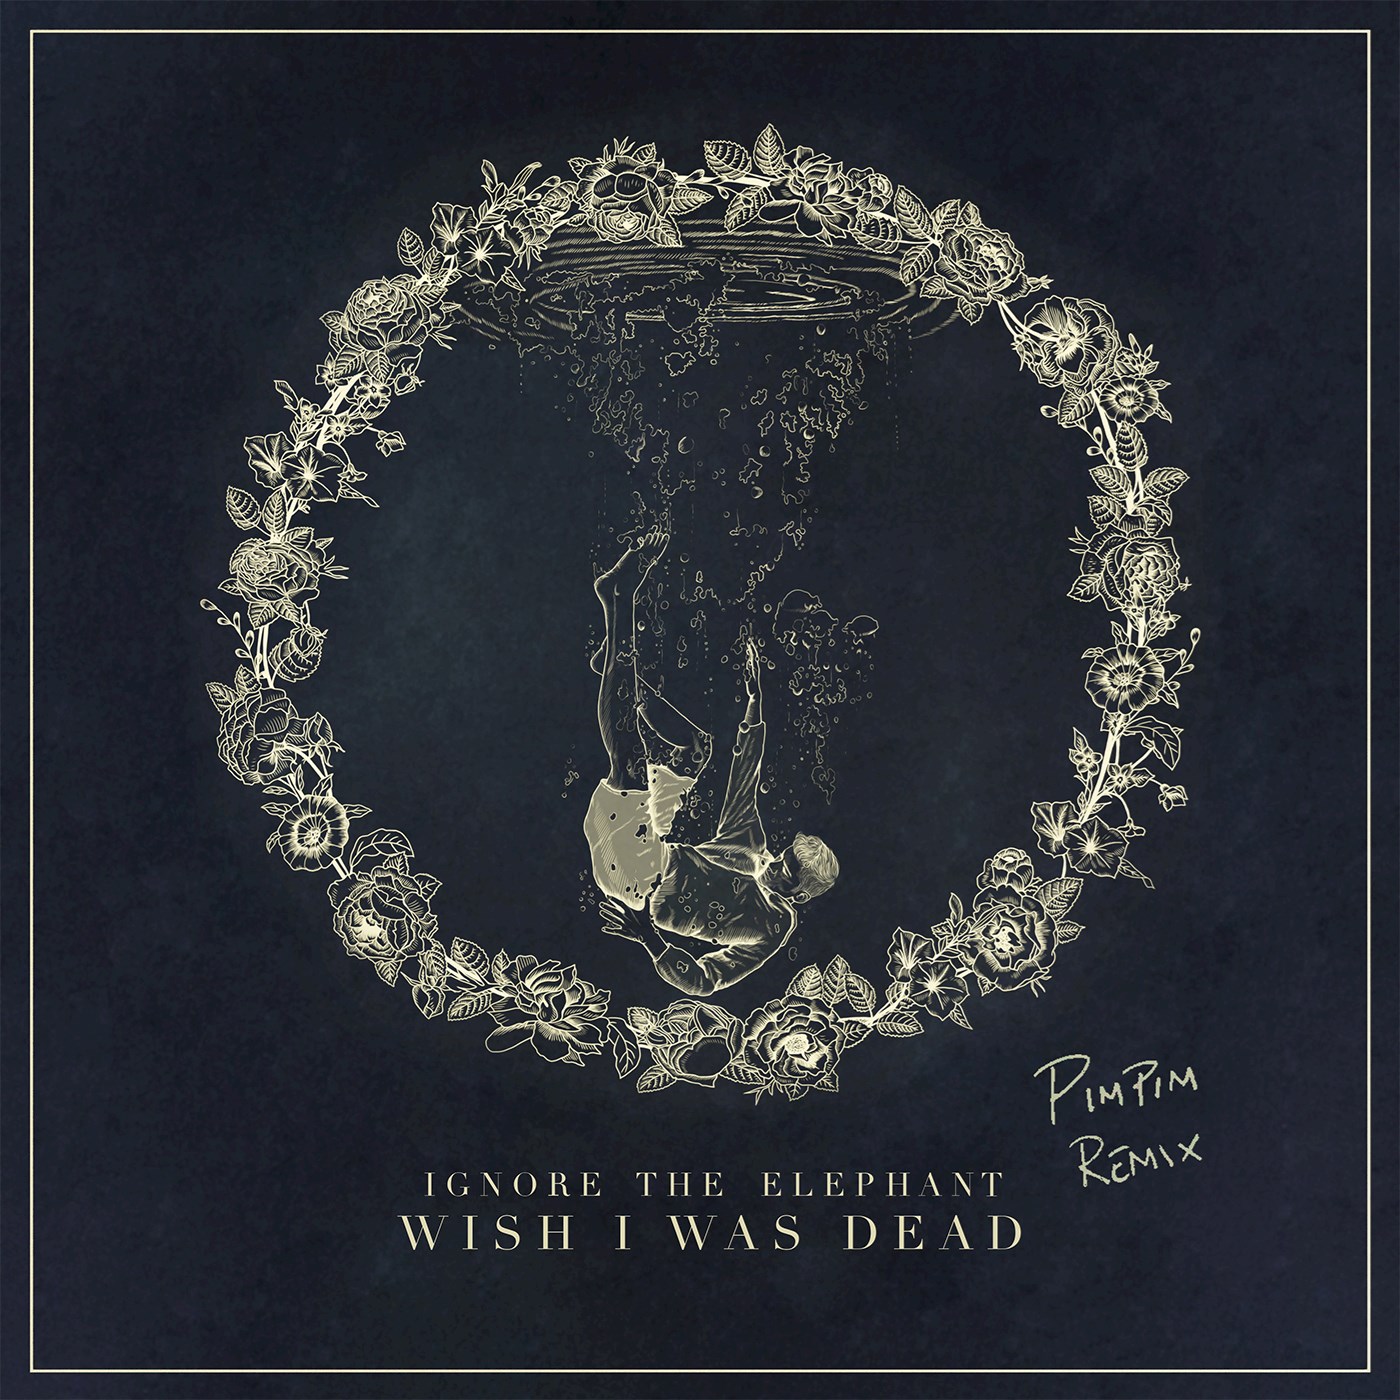 Wish I Was Dead (Pimpim Remix)